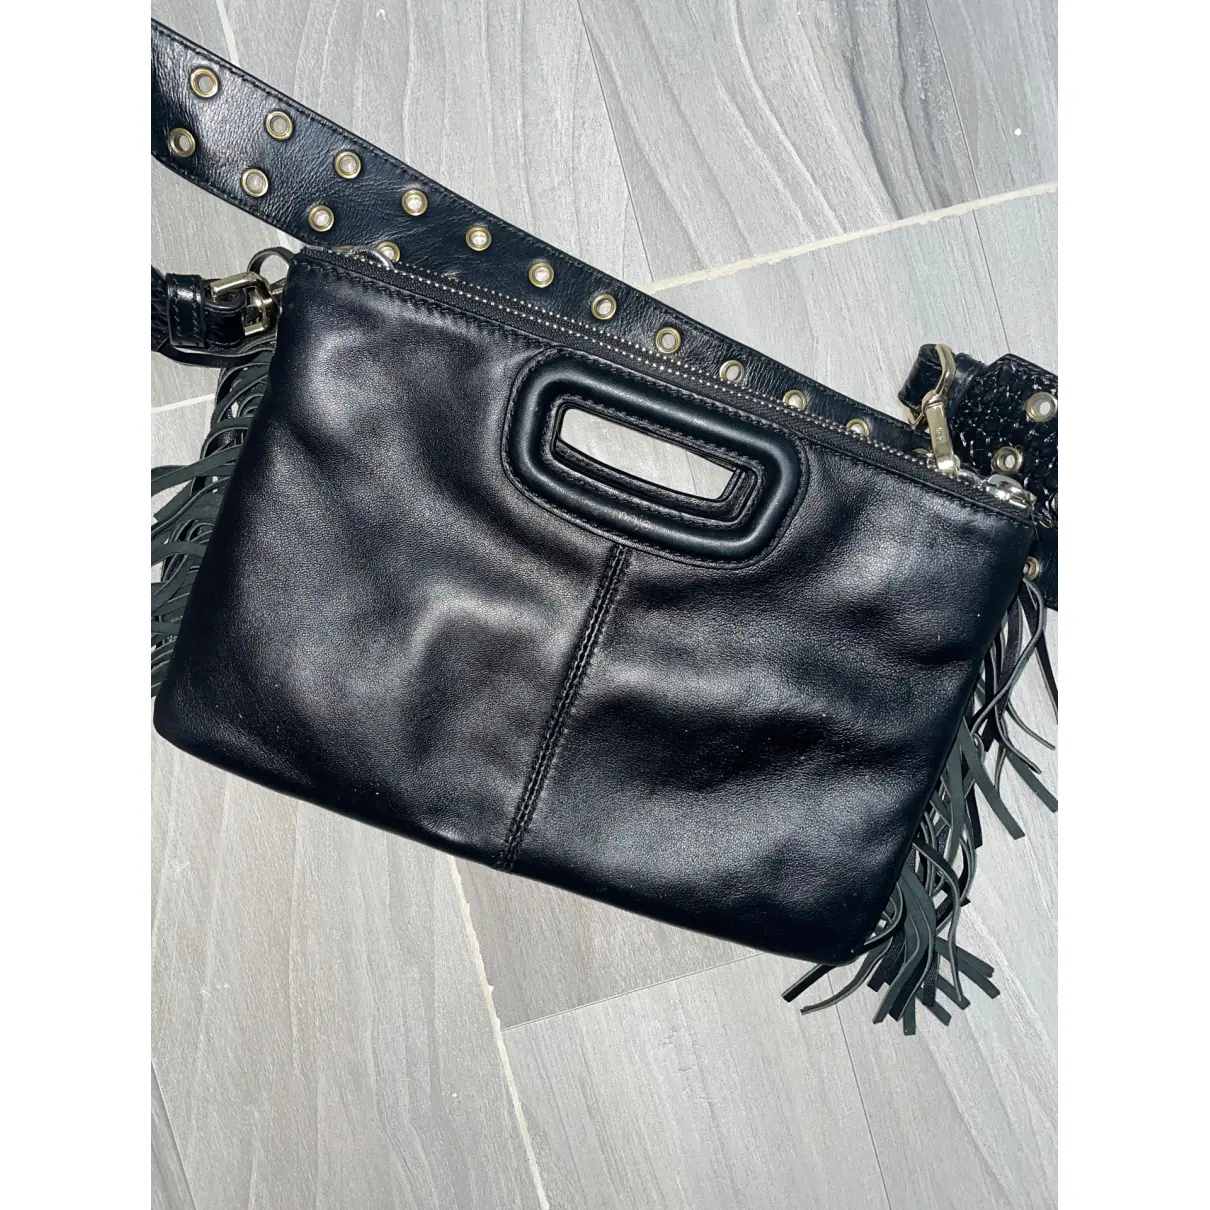 Buy Maje Sac M leather crossbody bag online